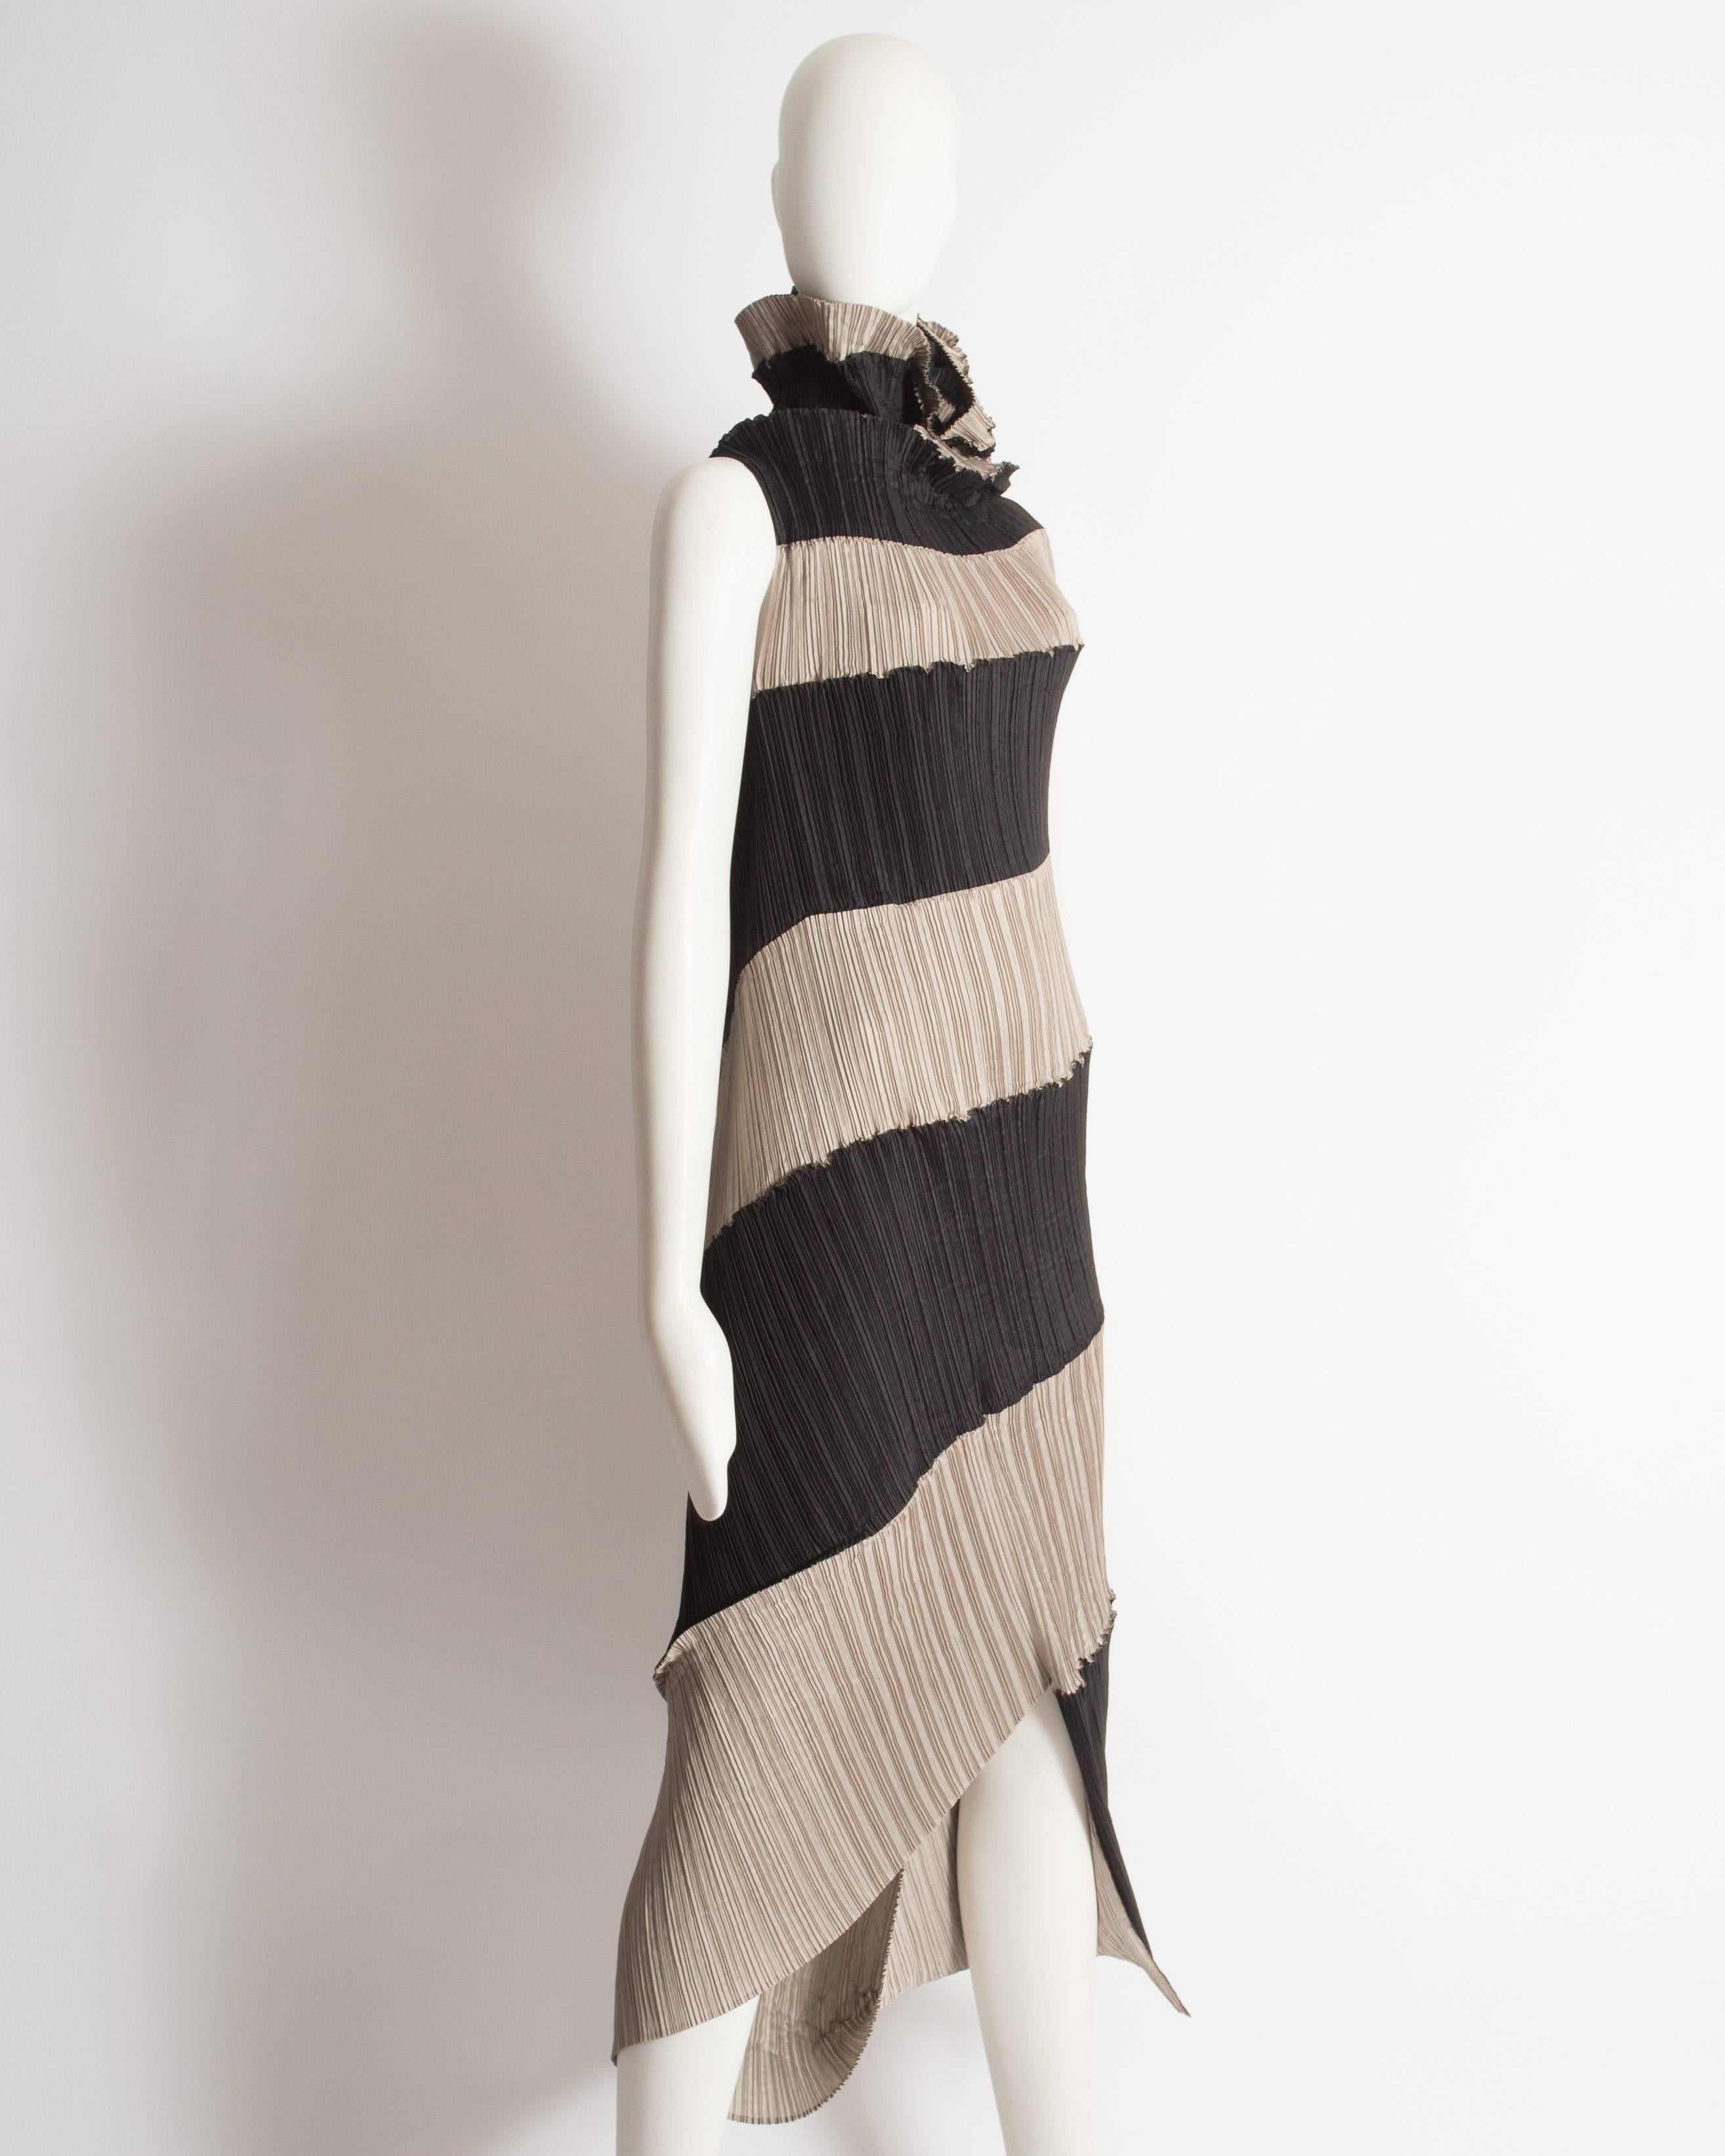 Black Issey Miyake pleated striped dress, circa 1990